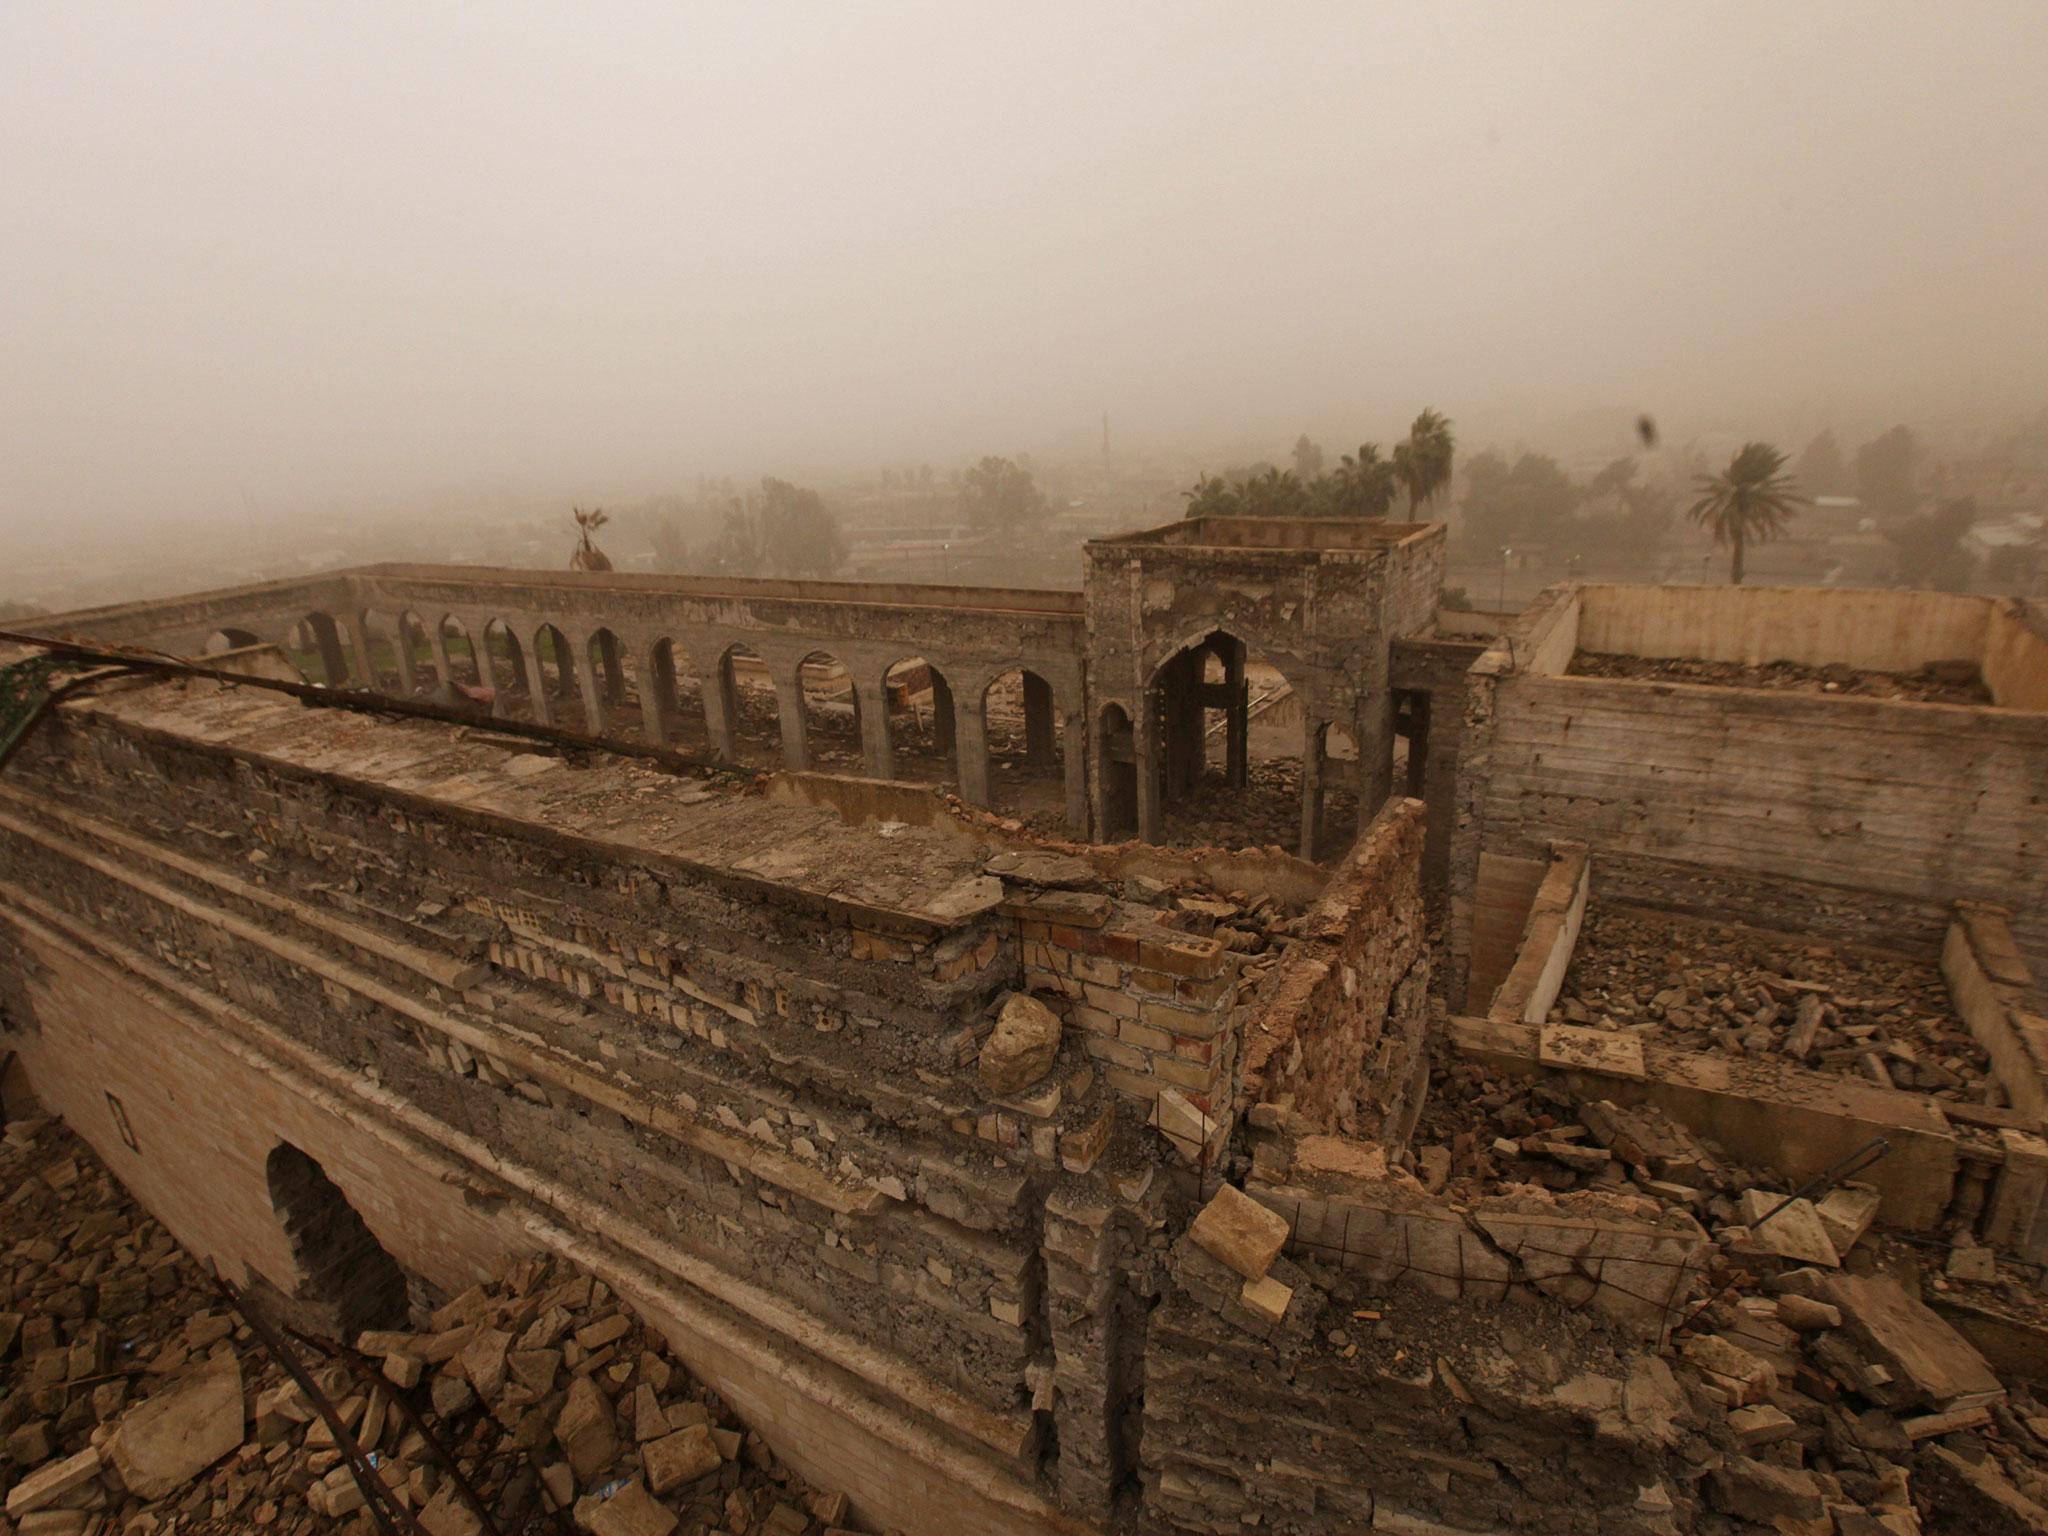 &#13;
The Nebi Yunus shrine was discovered wrecked and crumbling by Iraqi soldiers Reuters/Azad Lashkari&#13;